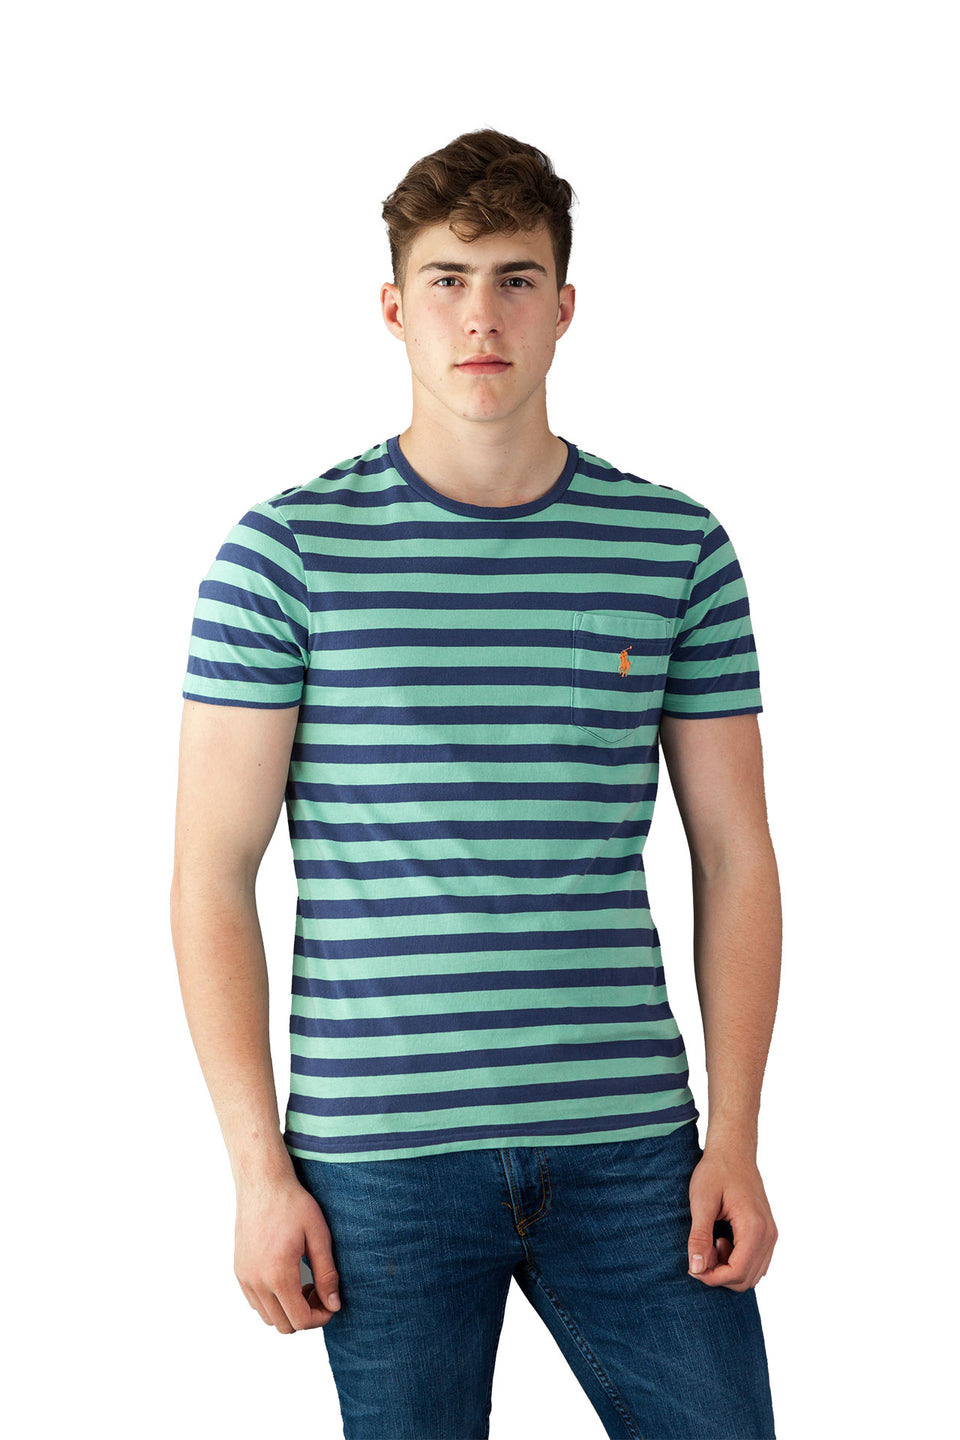 Ralph Lauren Custom Fit Stripe Crew Neck T Shirt - Camden Connaught